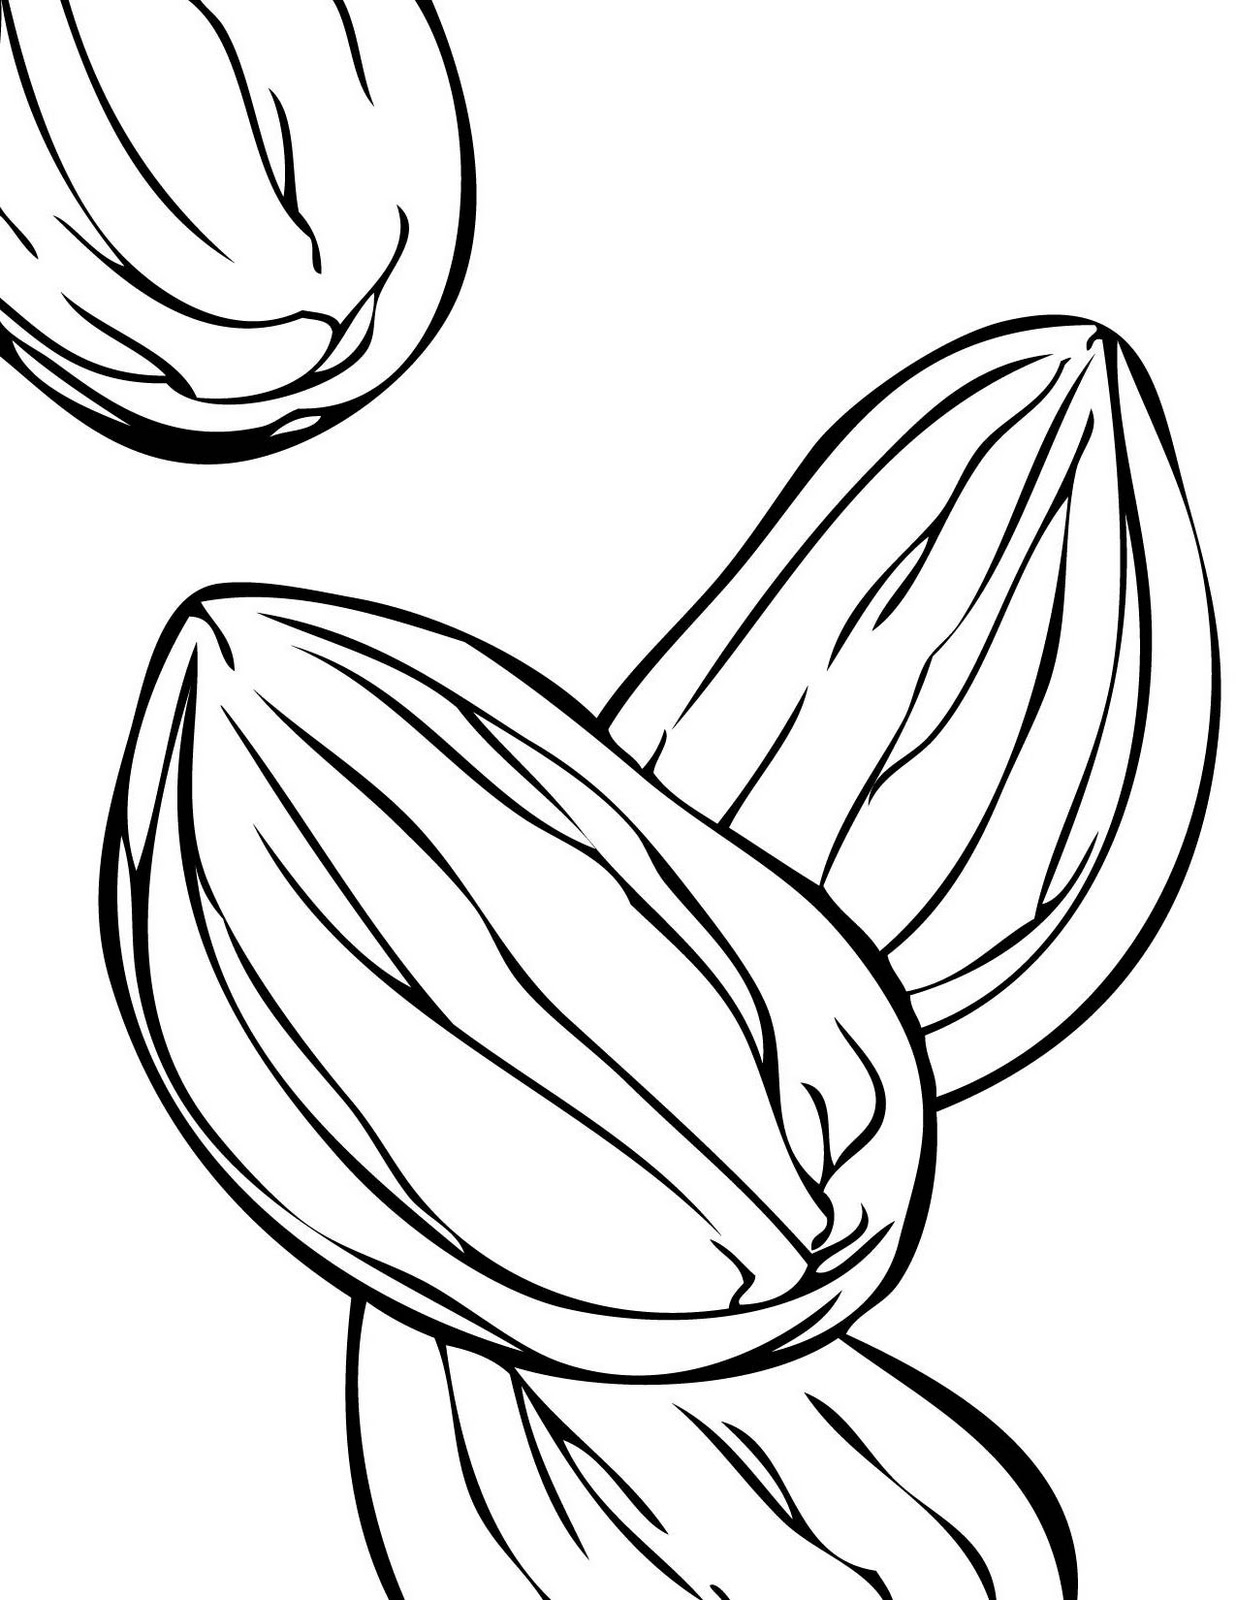 Almond Cartoon Images - Almond Drawing | Bocainwasul